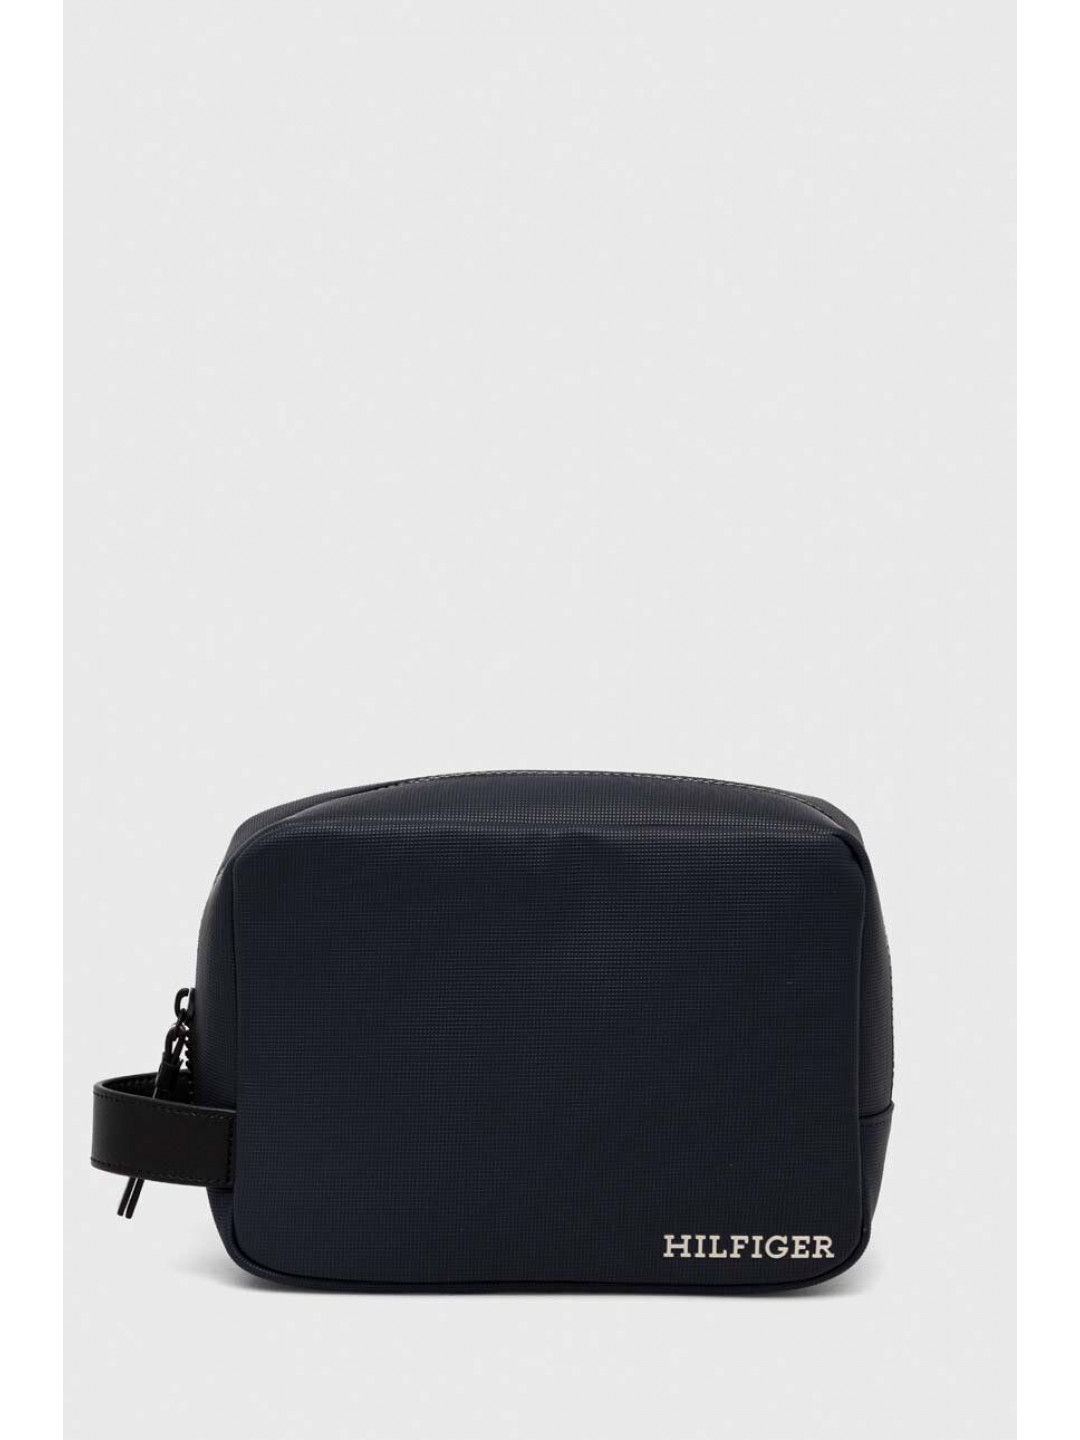 Kosmetická taška Tommy Hilfiger tmavomodrá barva